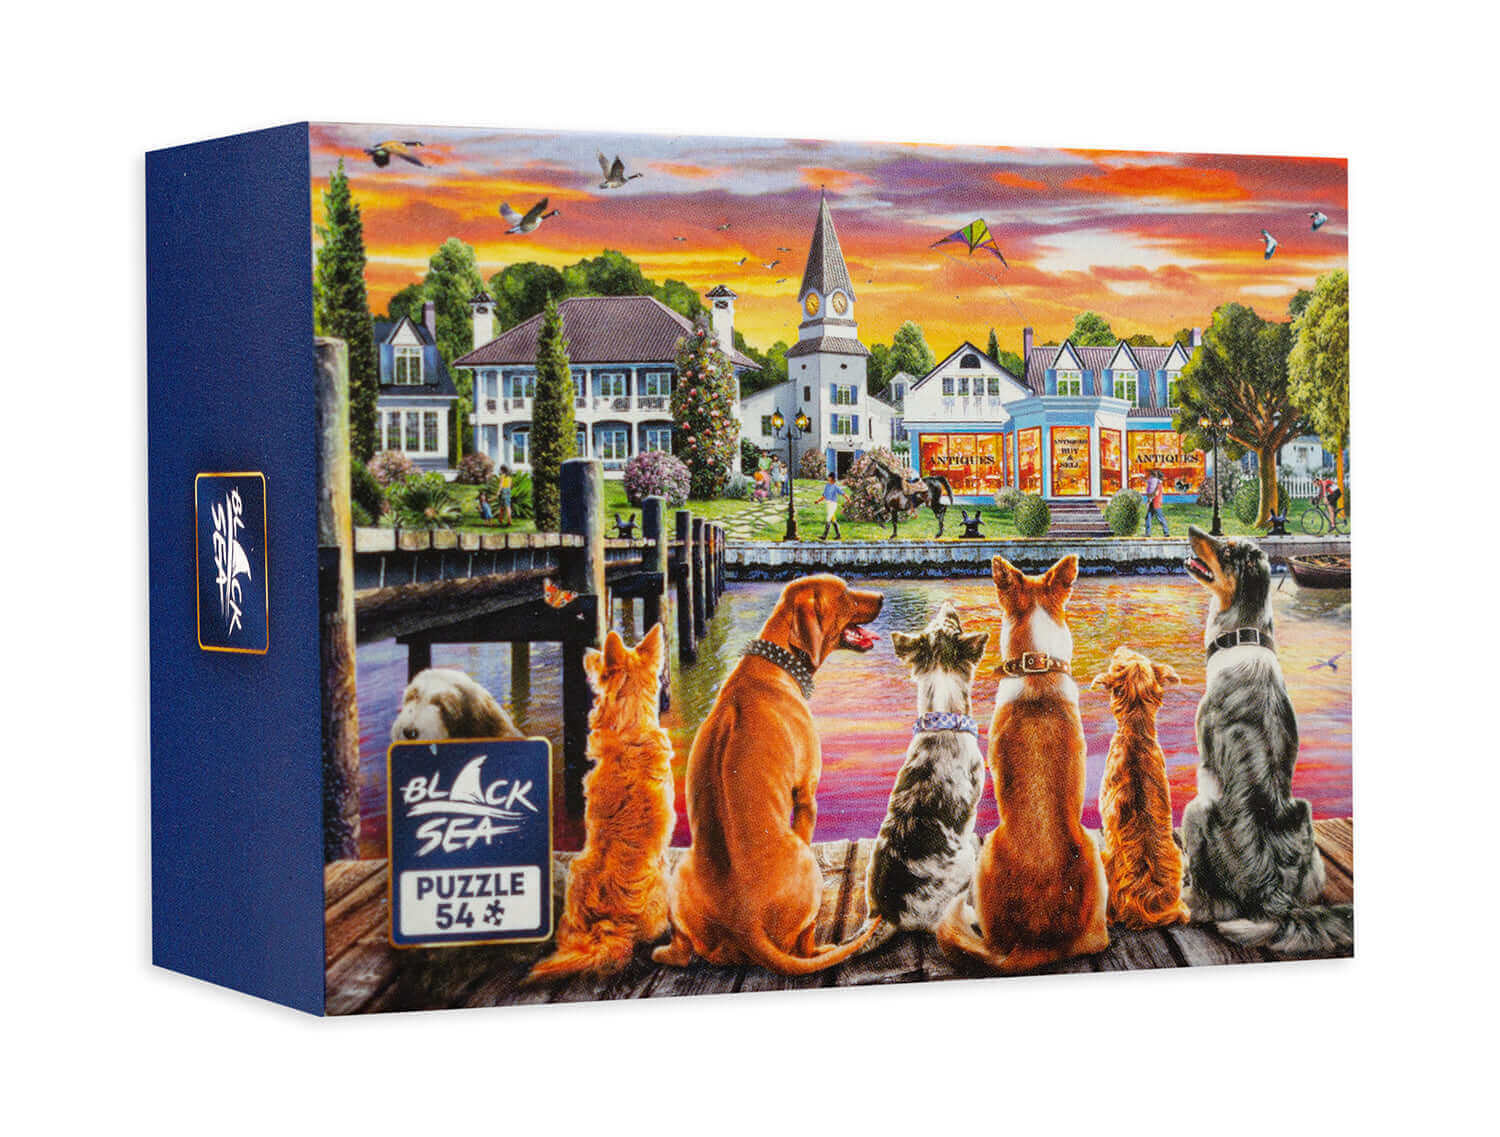 Mini puzzle Black sea 54 pieces - Dogs on the Quay, -